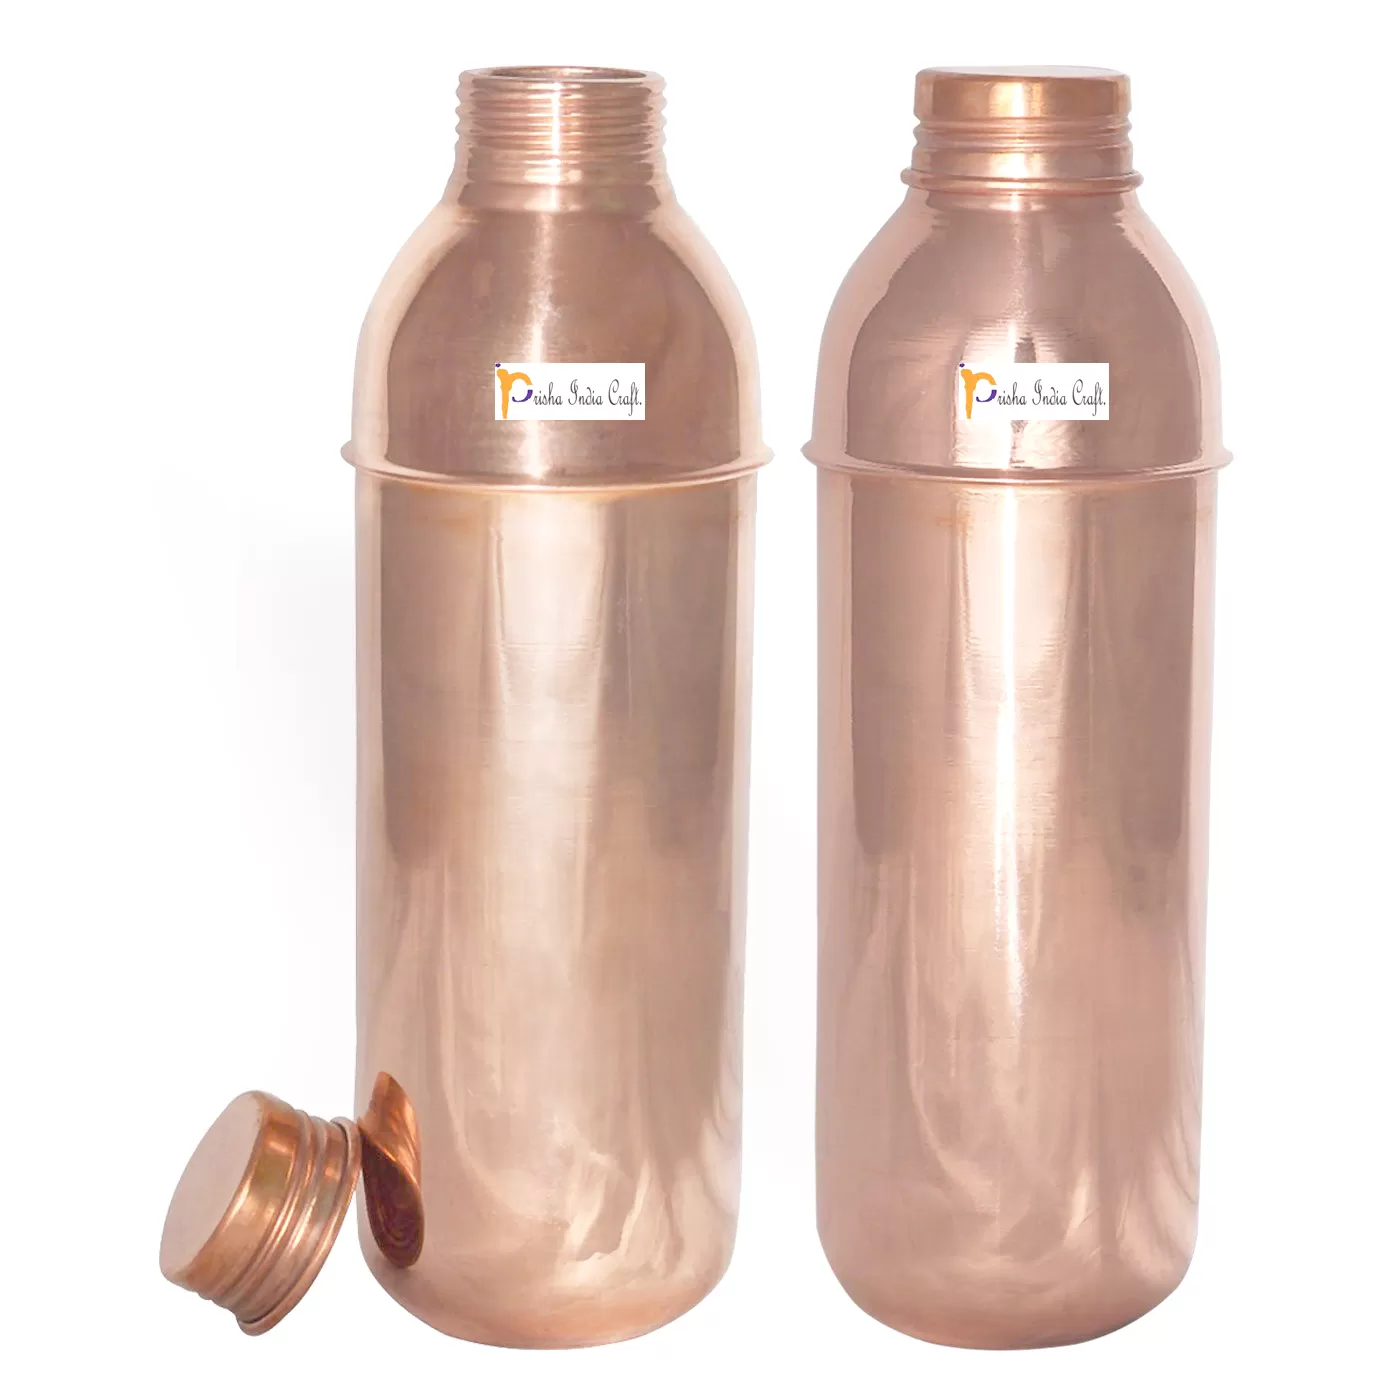 800 ML / 27 oz Set of 2 - DIWALI GIFT Copper New Bislery Stylish Bottle with Ayurvedic benefited